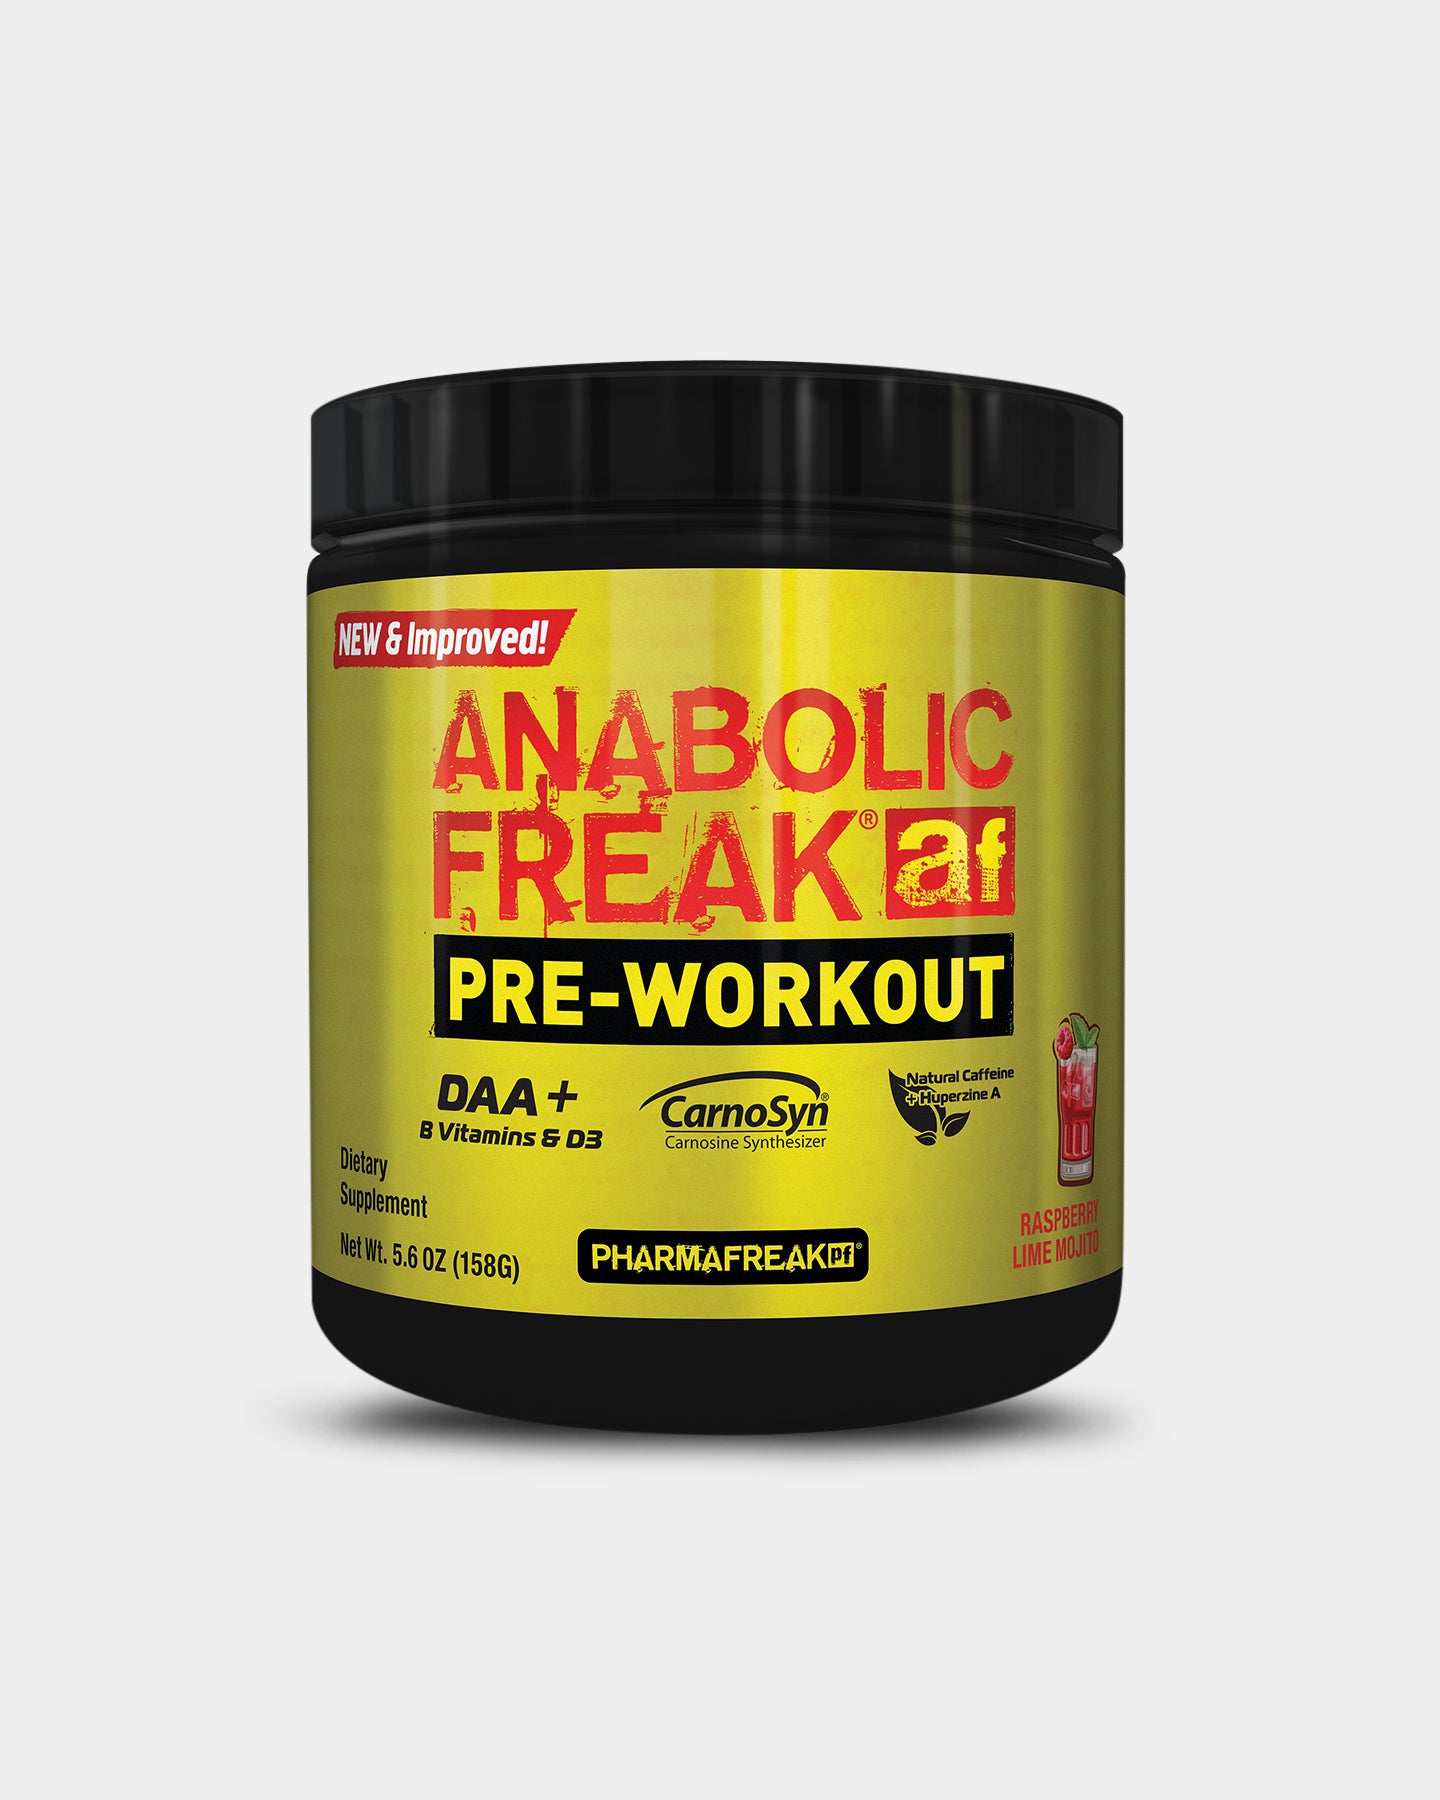 PharmaFreak Anabolic Freak AF Pre-Workout, Rasberry Mojito, 20 Servings